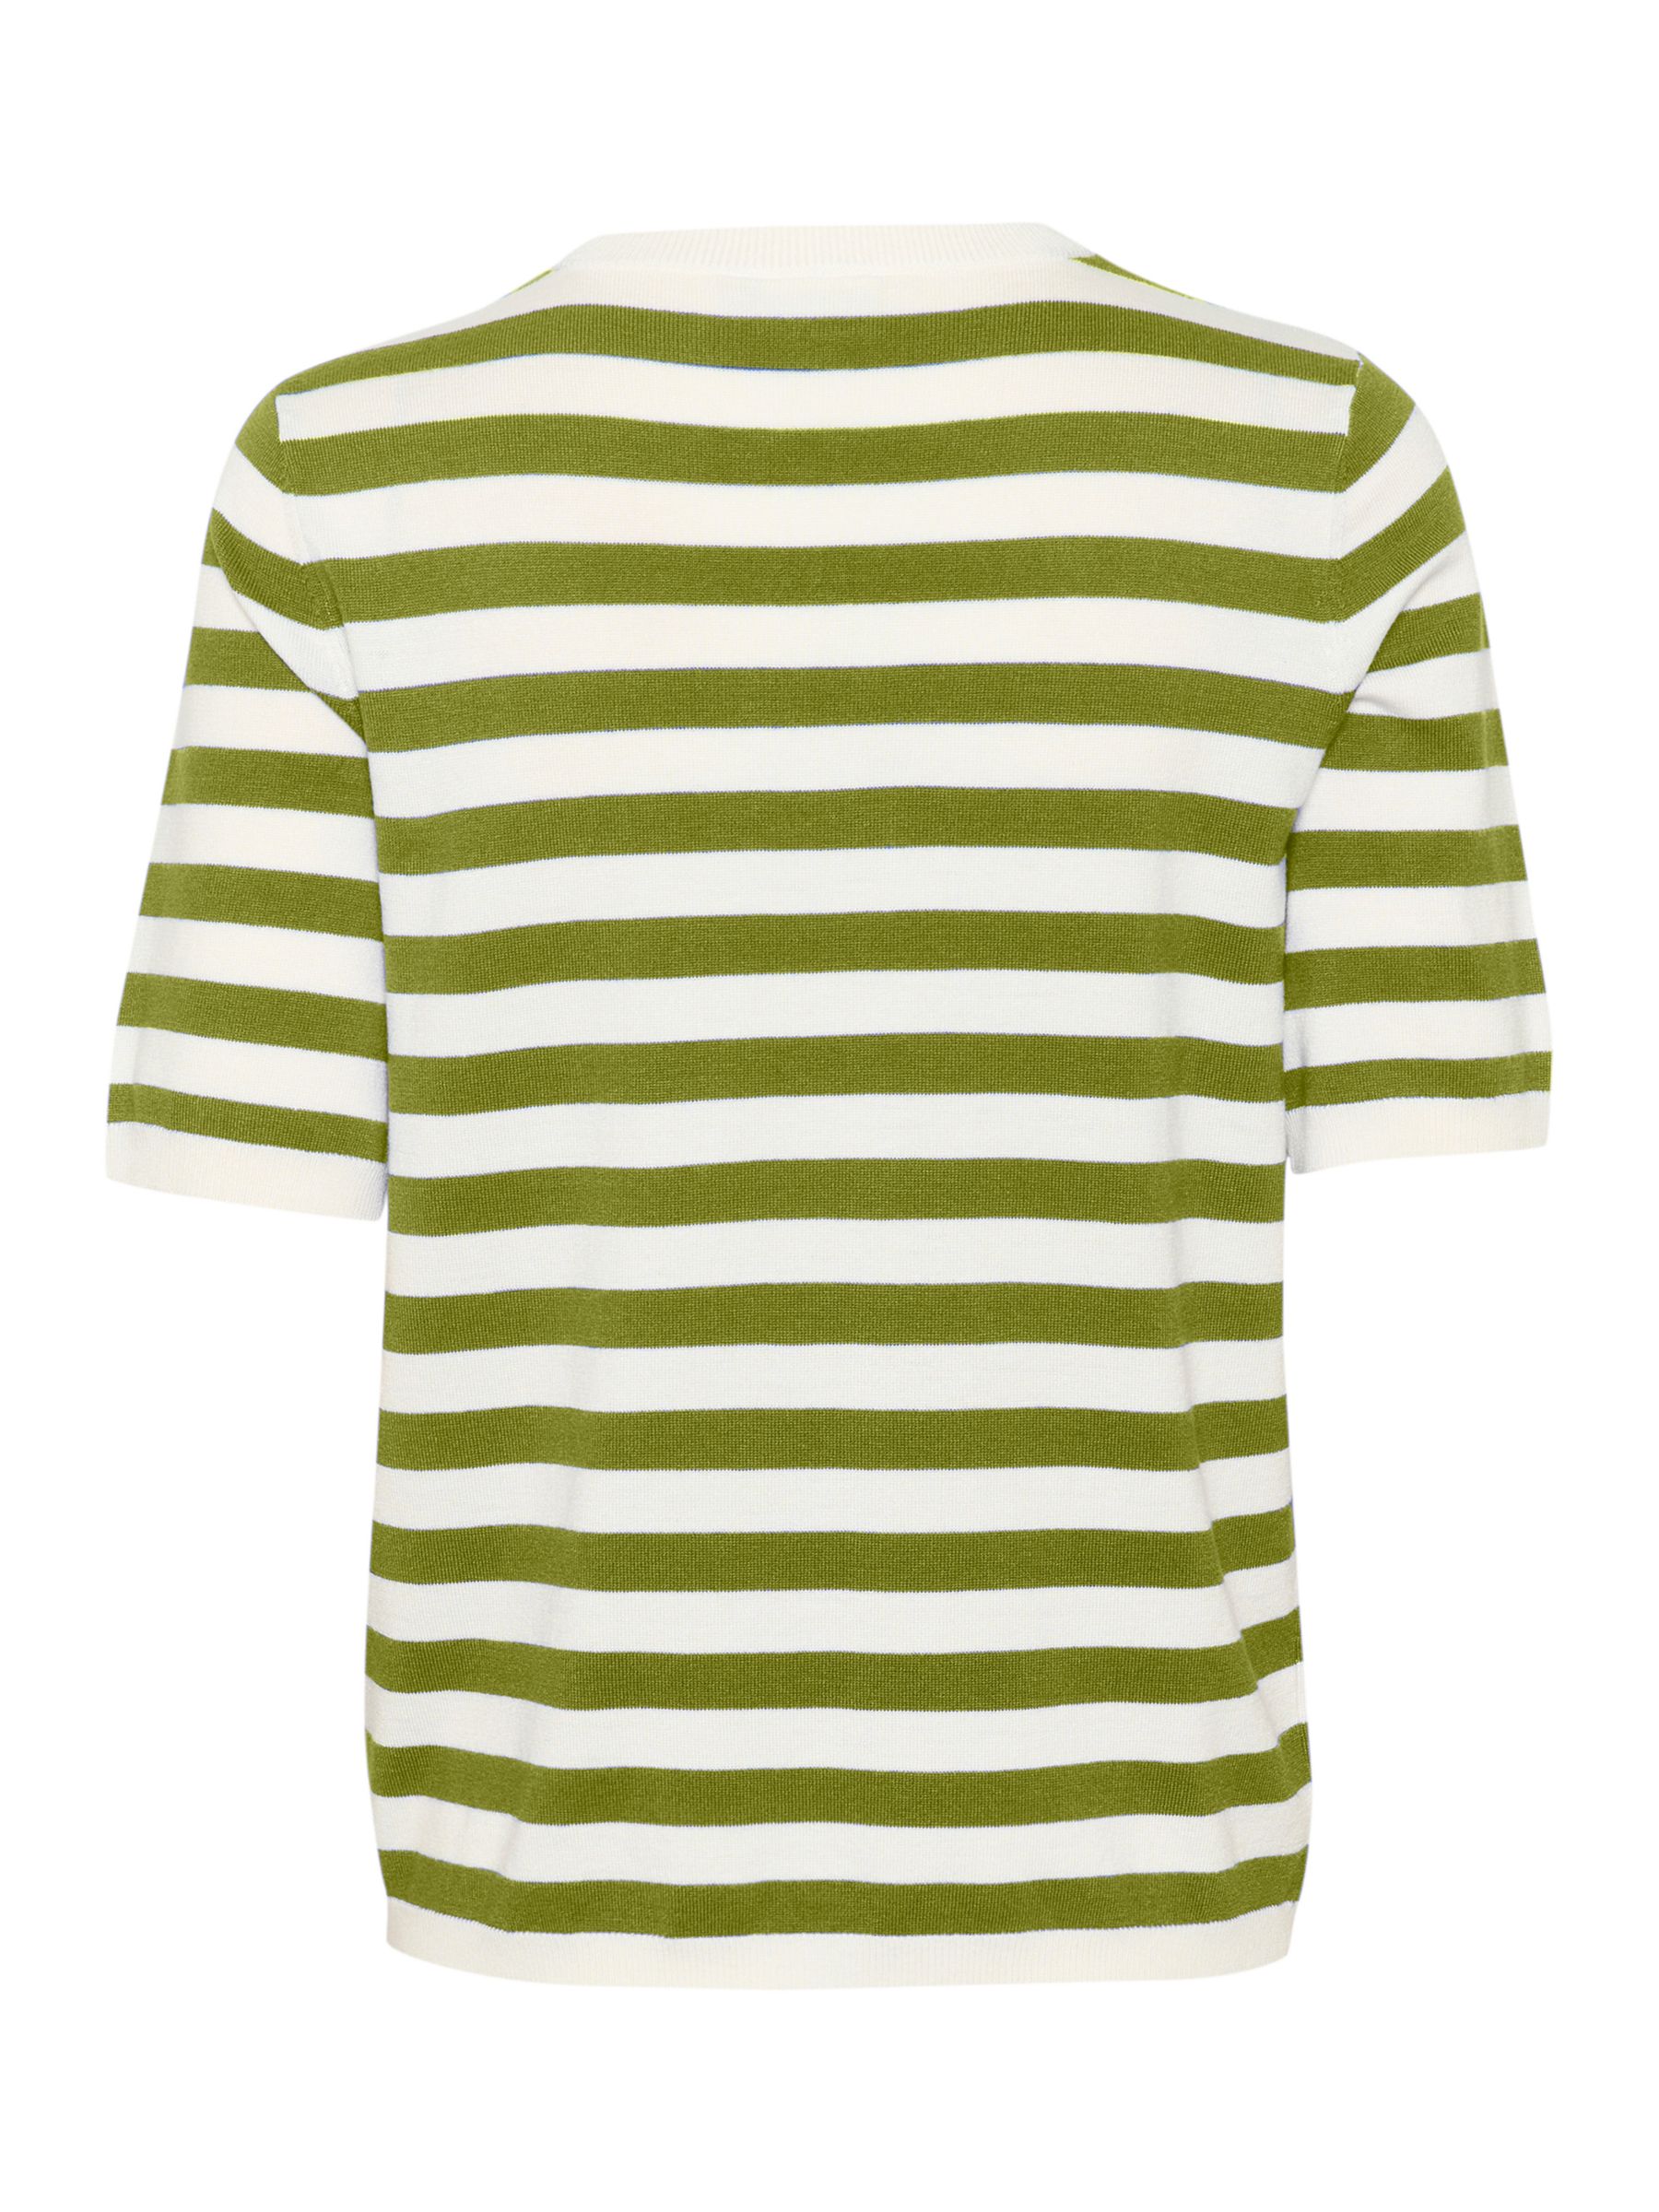 Buy KAFFE Milo Short Sleeve Striped Sweatshirt, Calla Green/Chalk Online at johnlewis.com